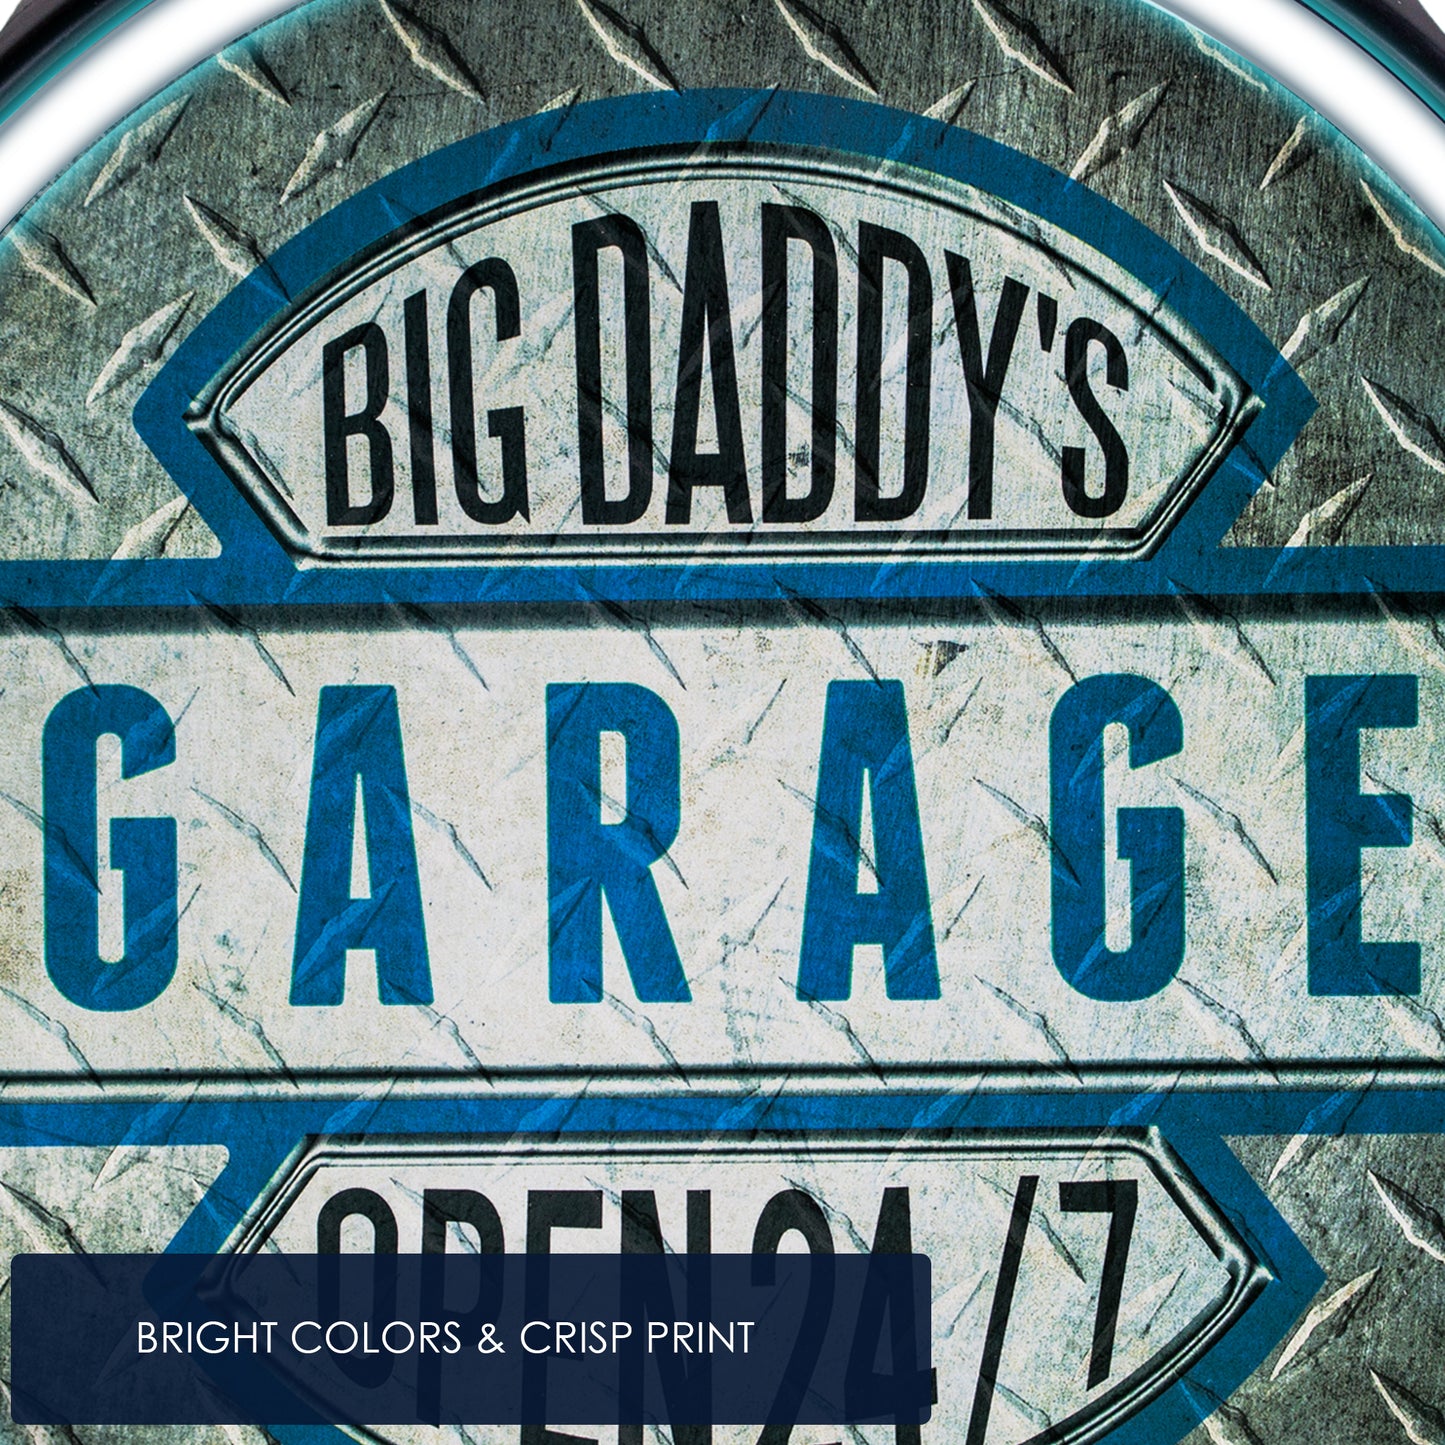 Big Daddy's Garage LED Neon Light Sign Wall Decor (12.5”)